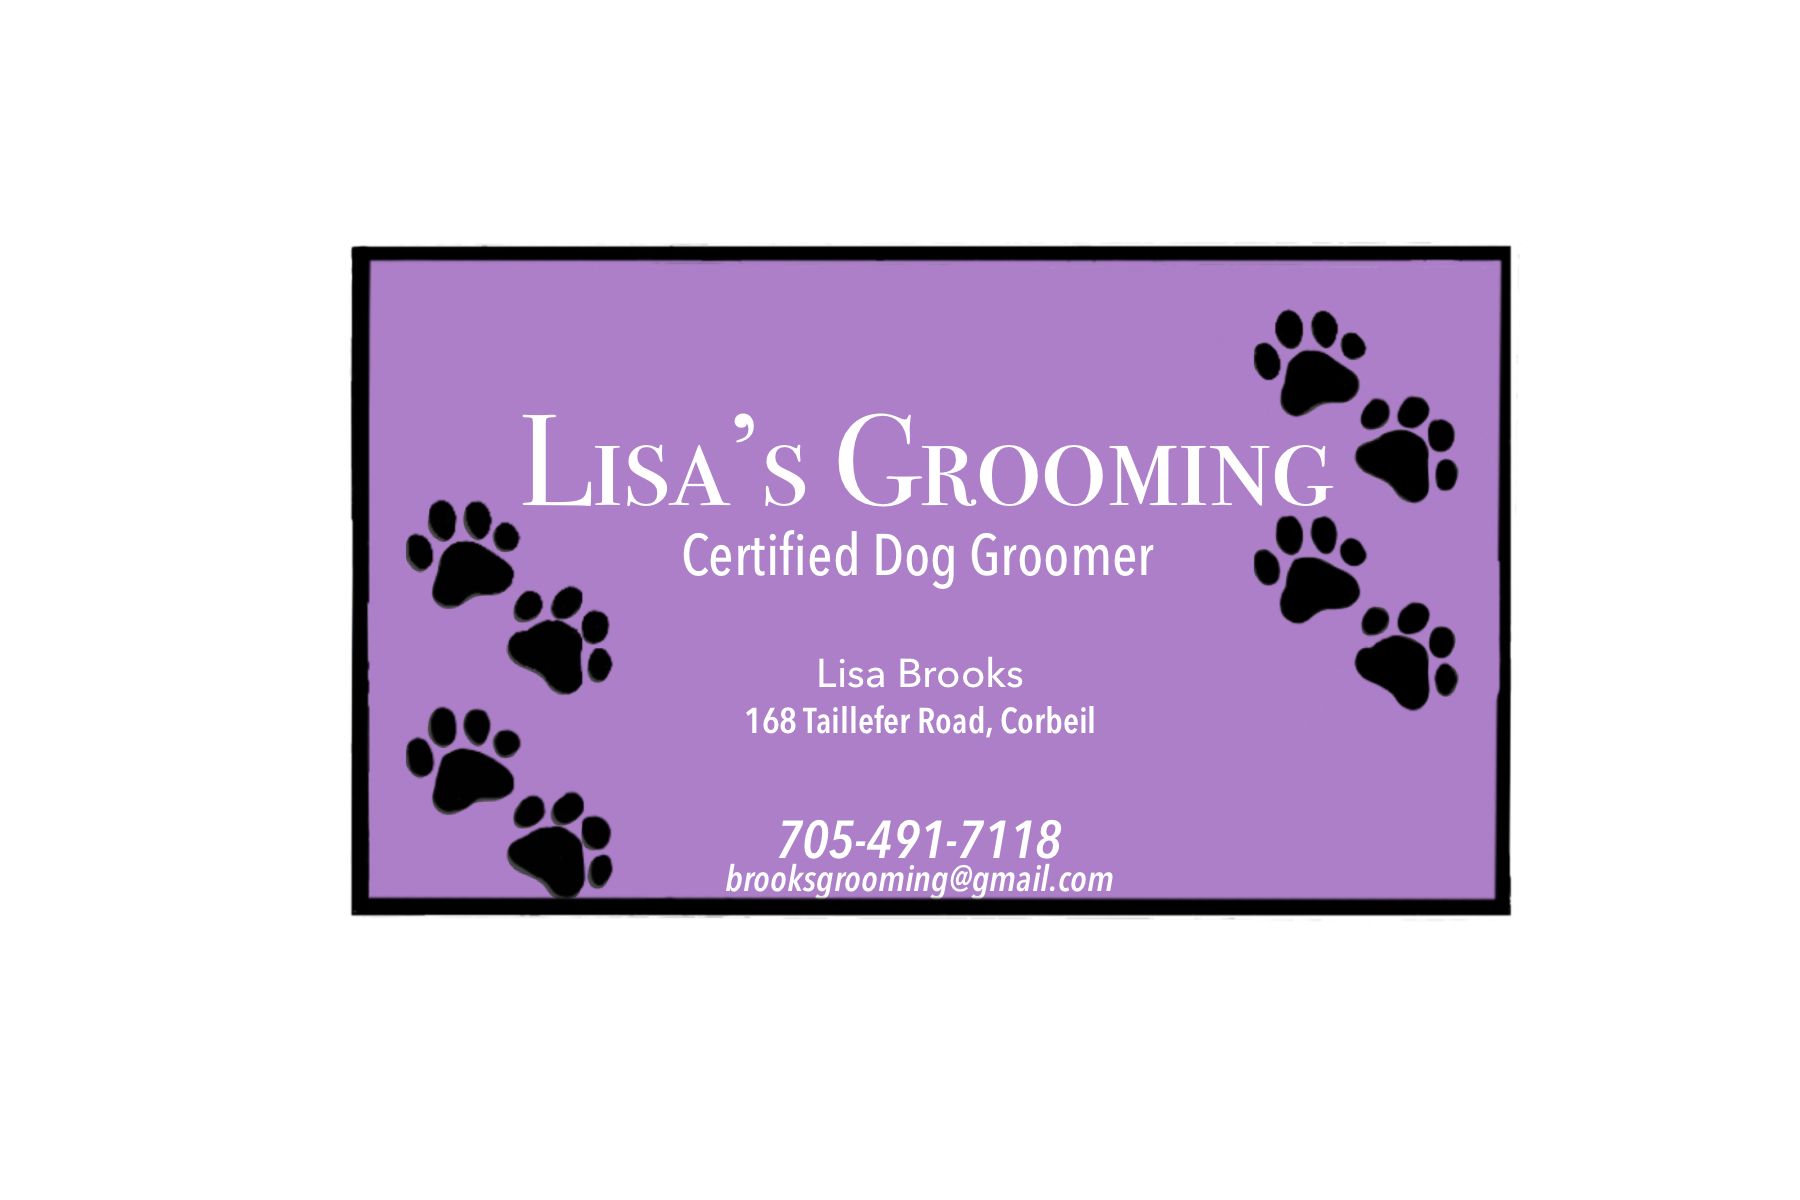 Logo image for Lisa’s Grooming